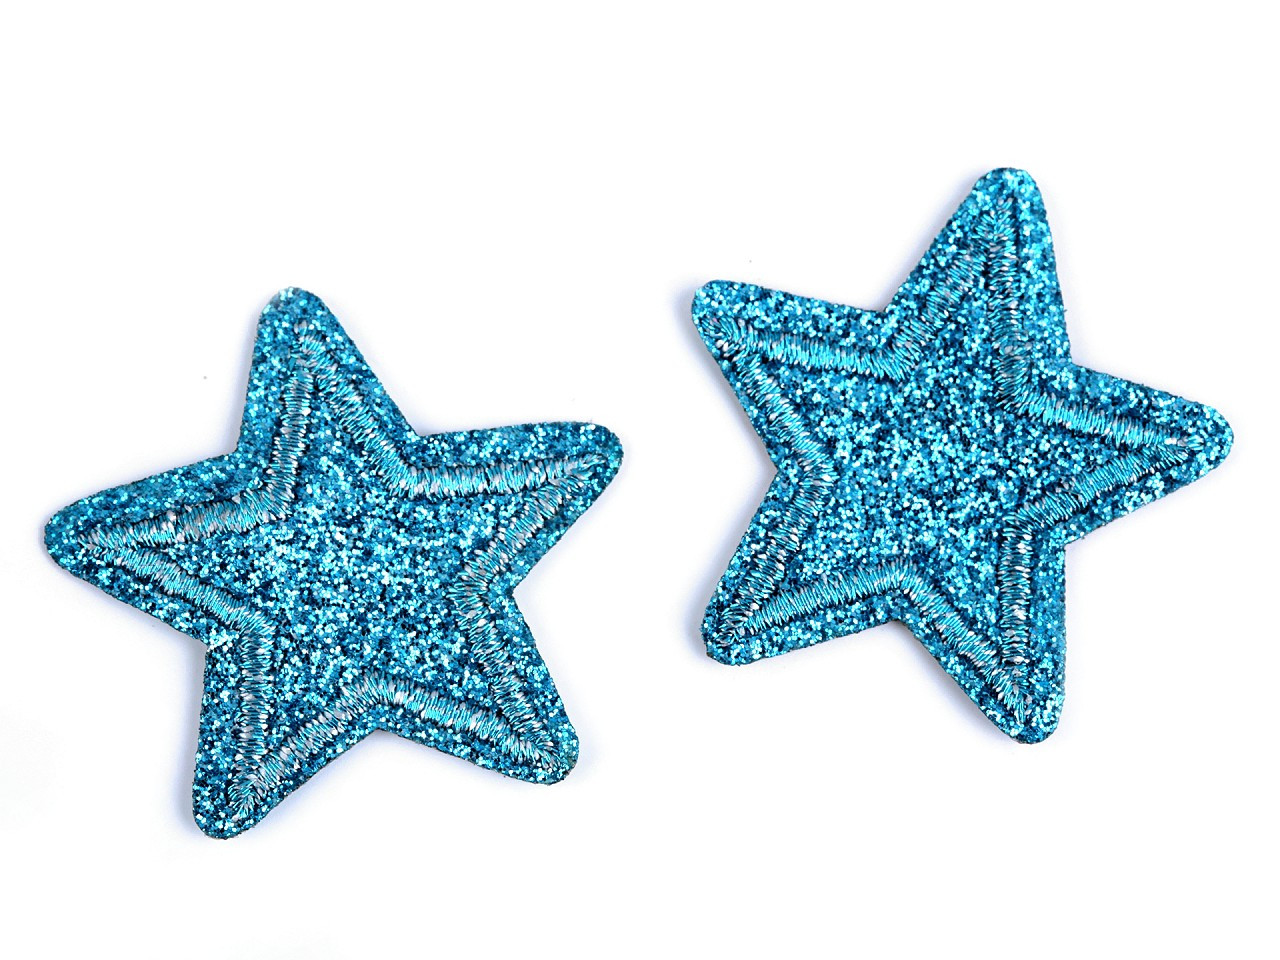 Nažehlovačka hvězda s glitry, barva 4 modrá sytá